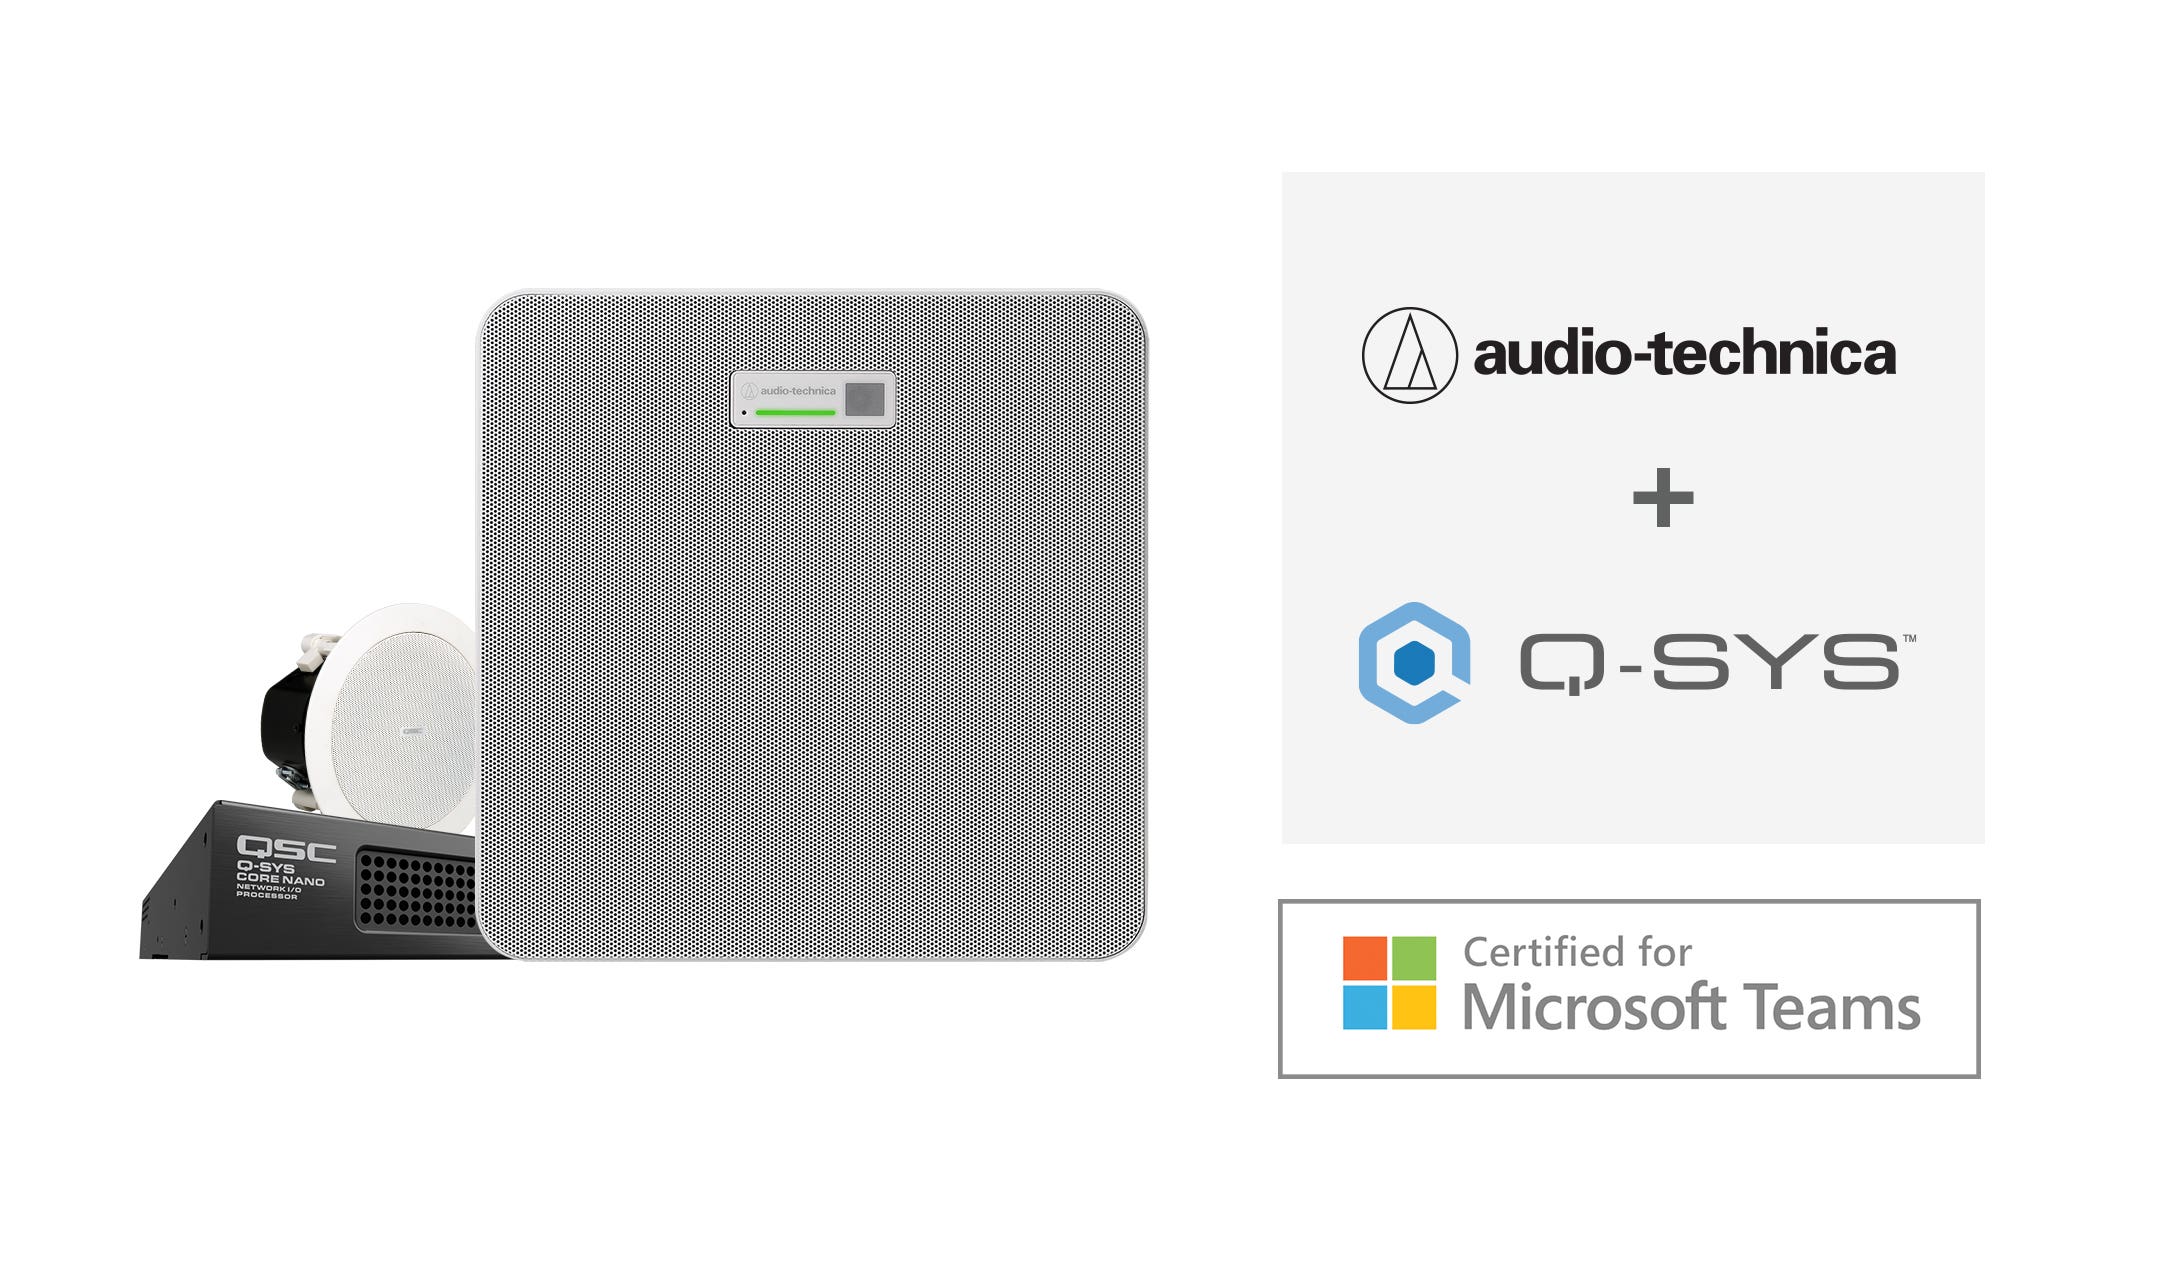 Audio-Technica ATND1061DAN Deckenmikrofon-Array in Kombination mit Q-SYS für Microsoft Teams Rooms zertifiziert